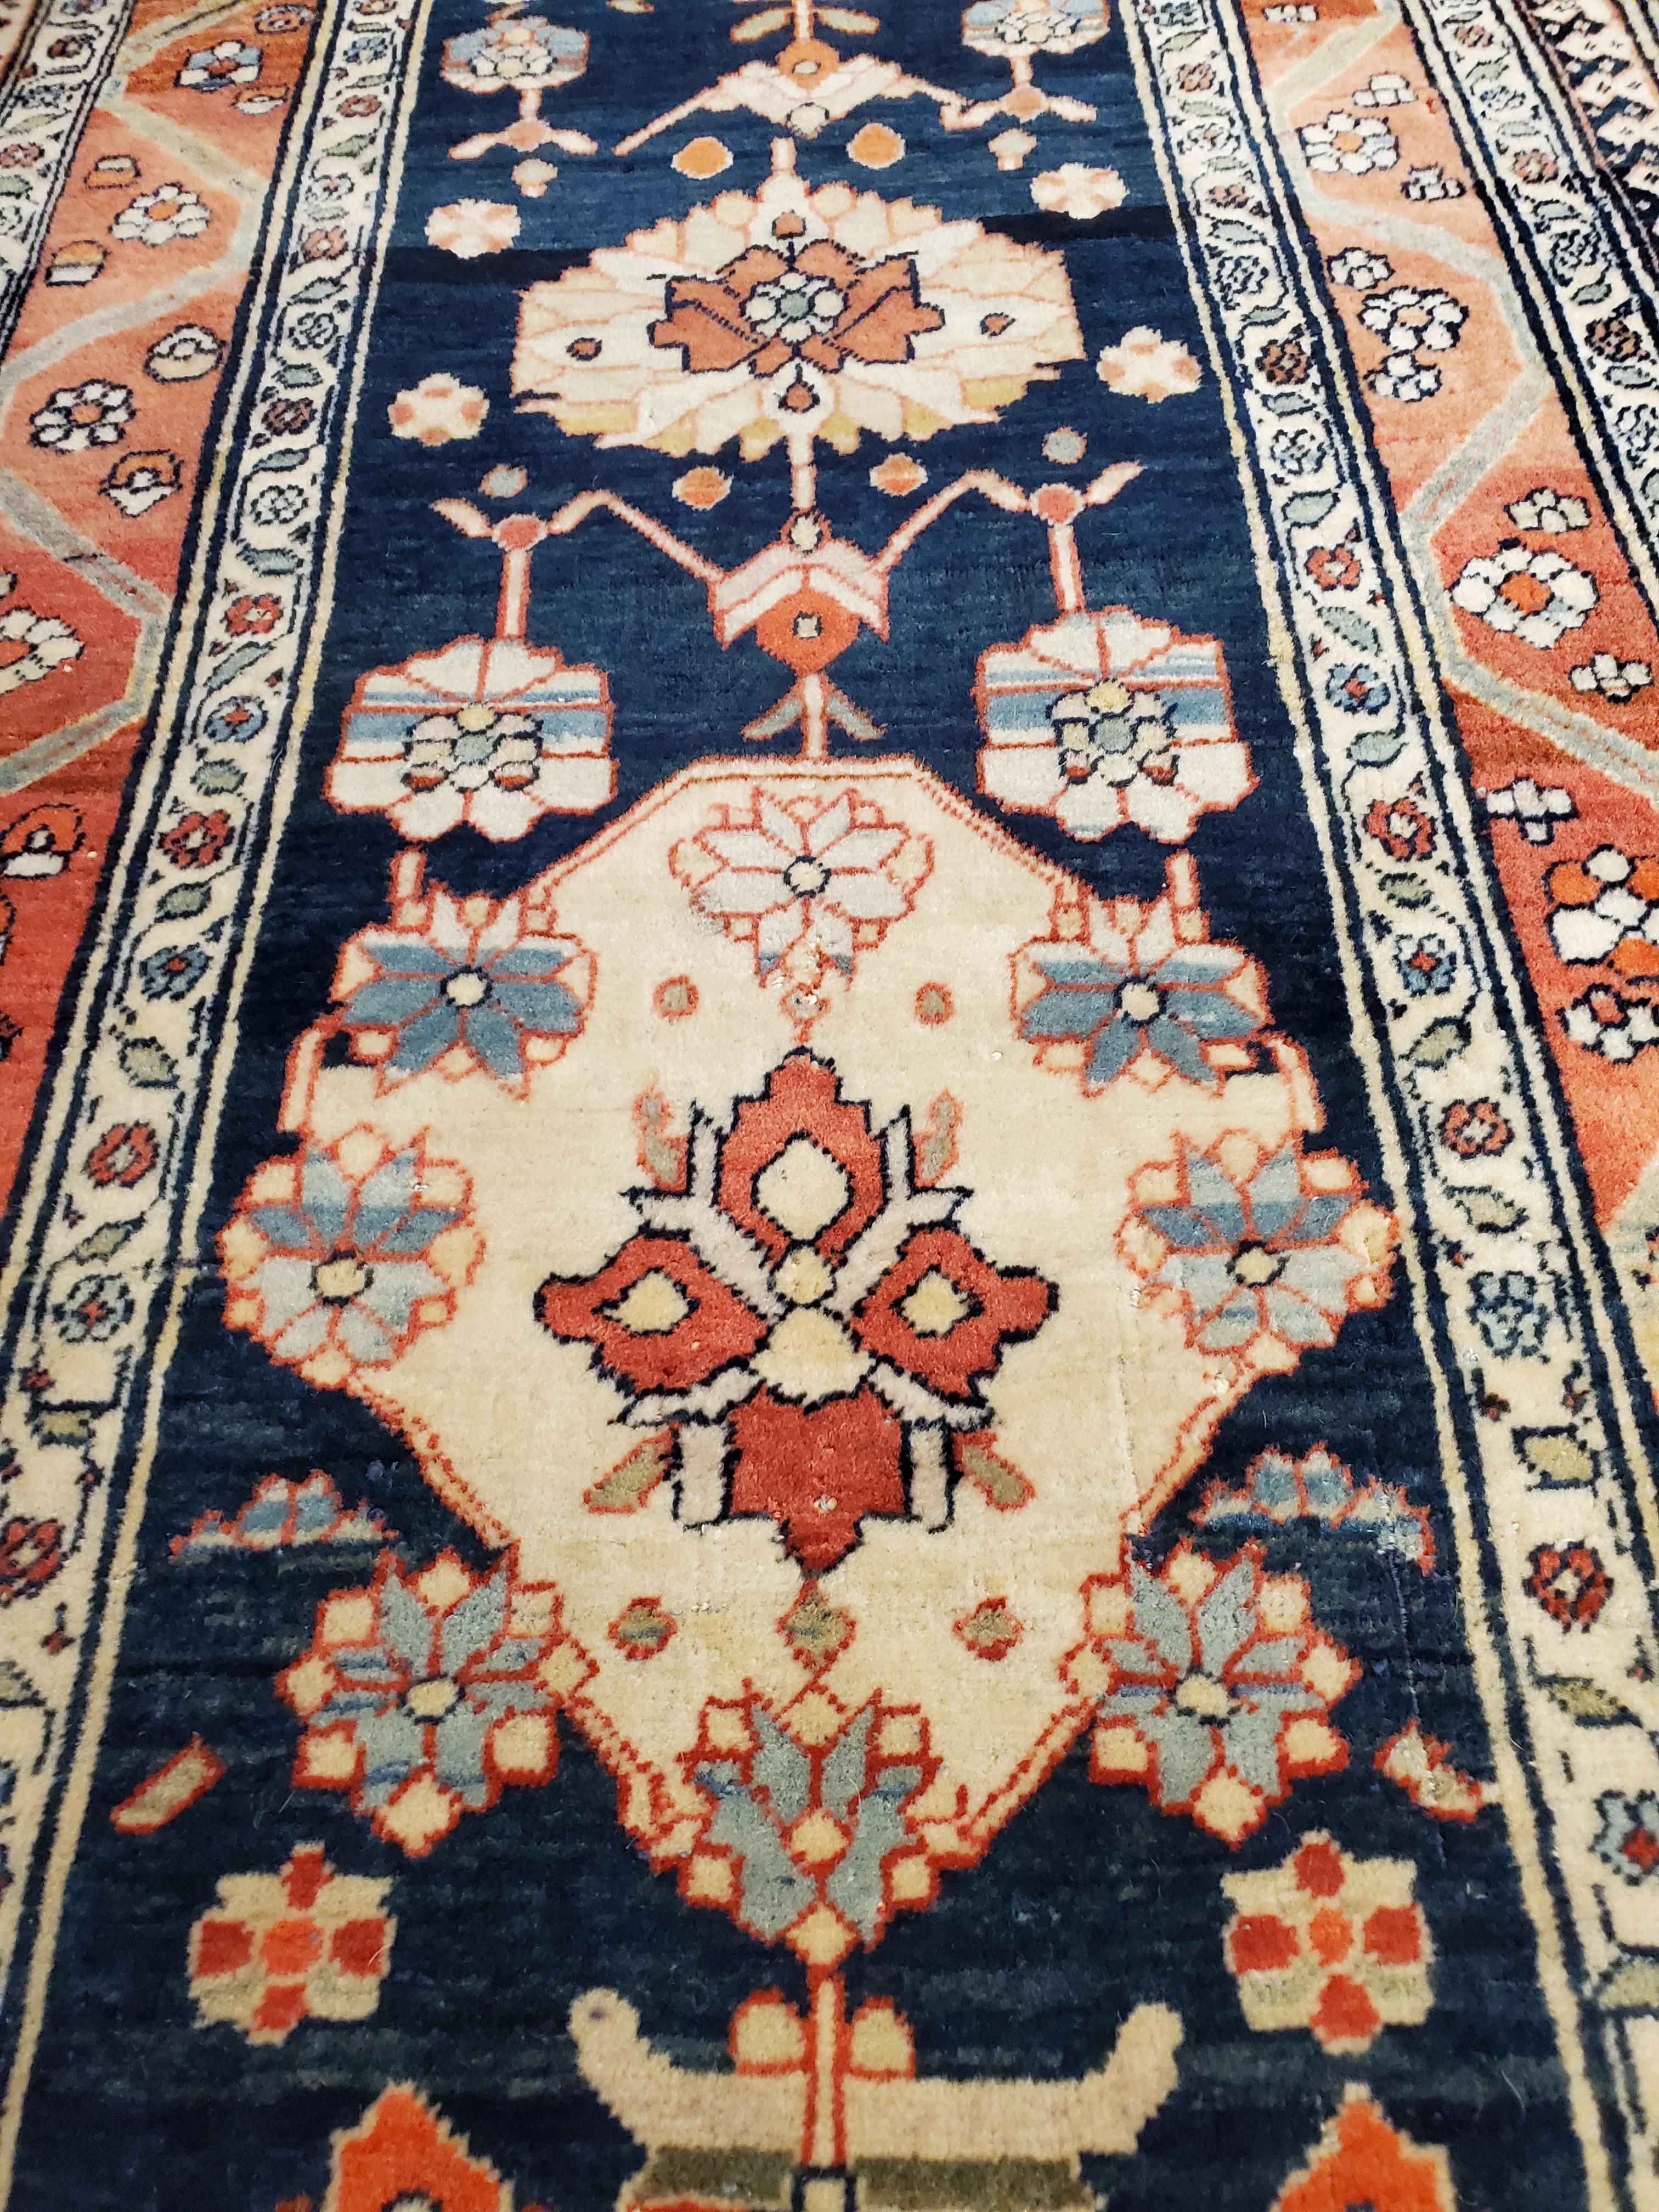 Antique Persian Mohtasham Kashan Carpet, Traditional, Ivory, Blue, Green, Reds 6